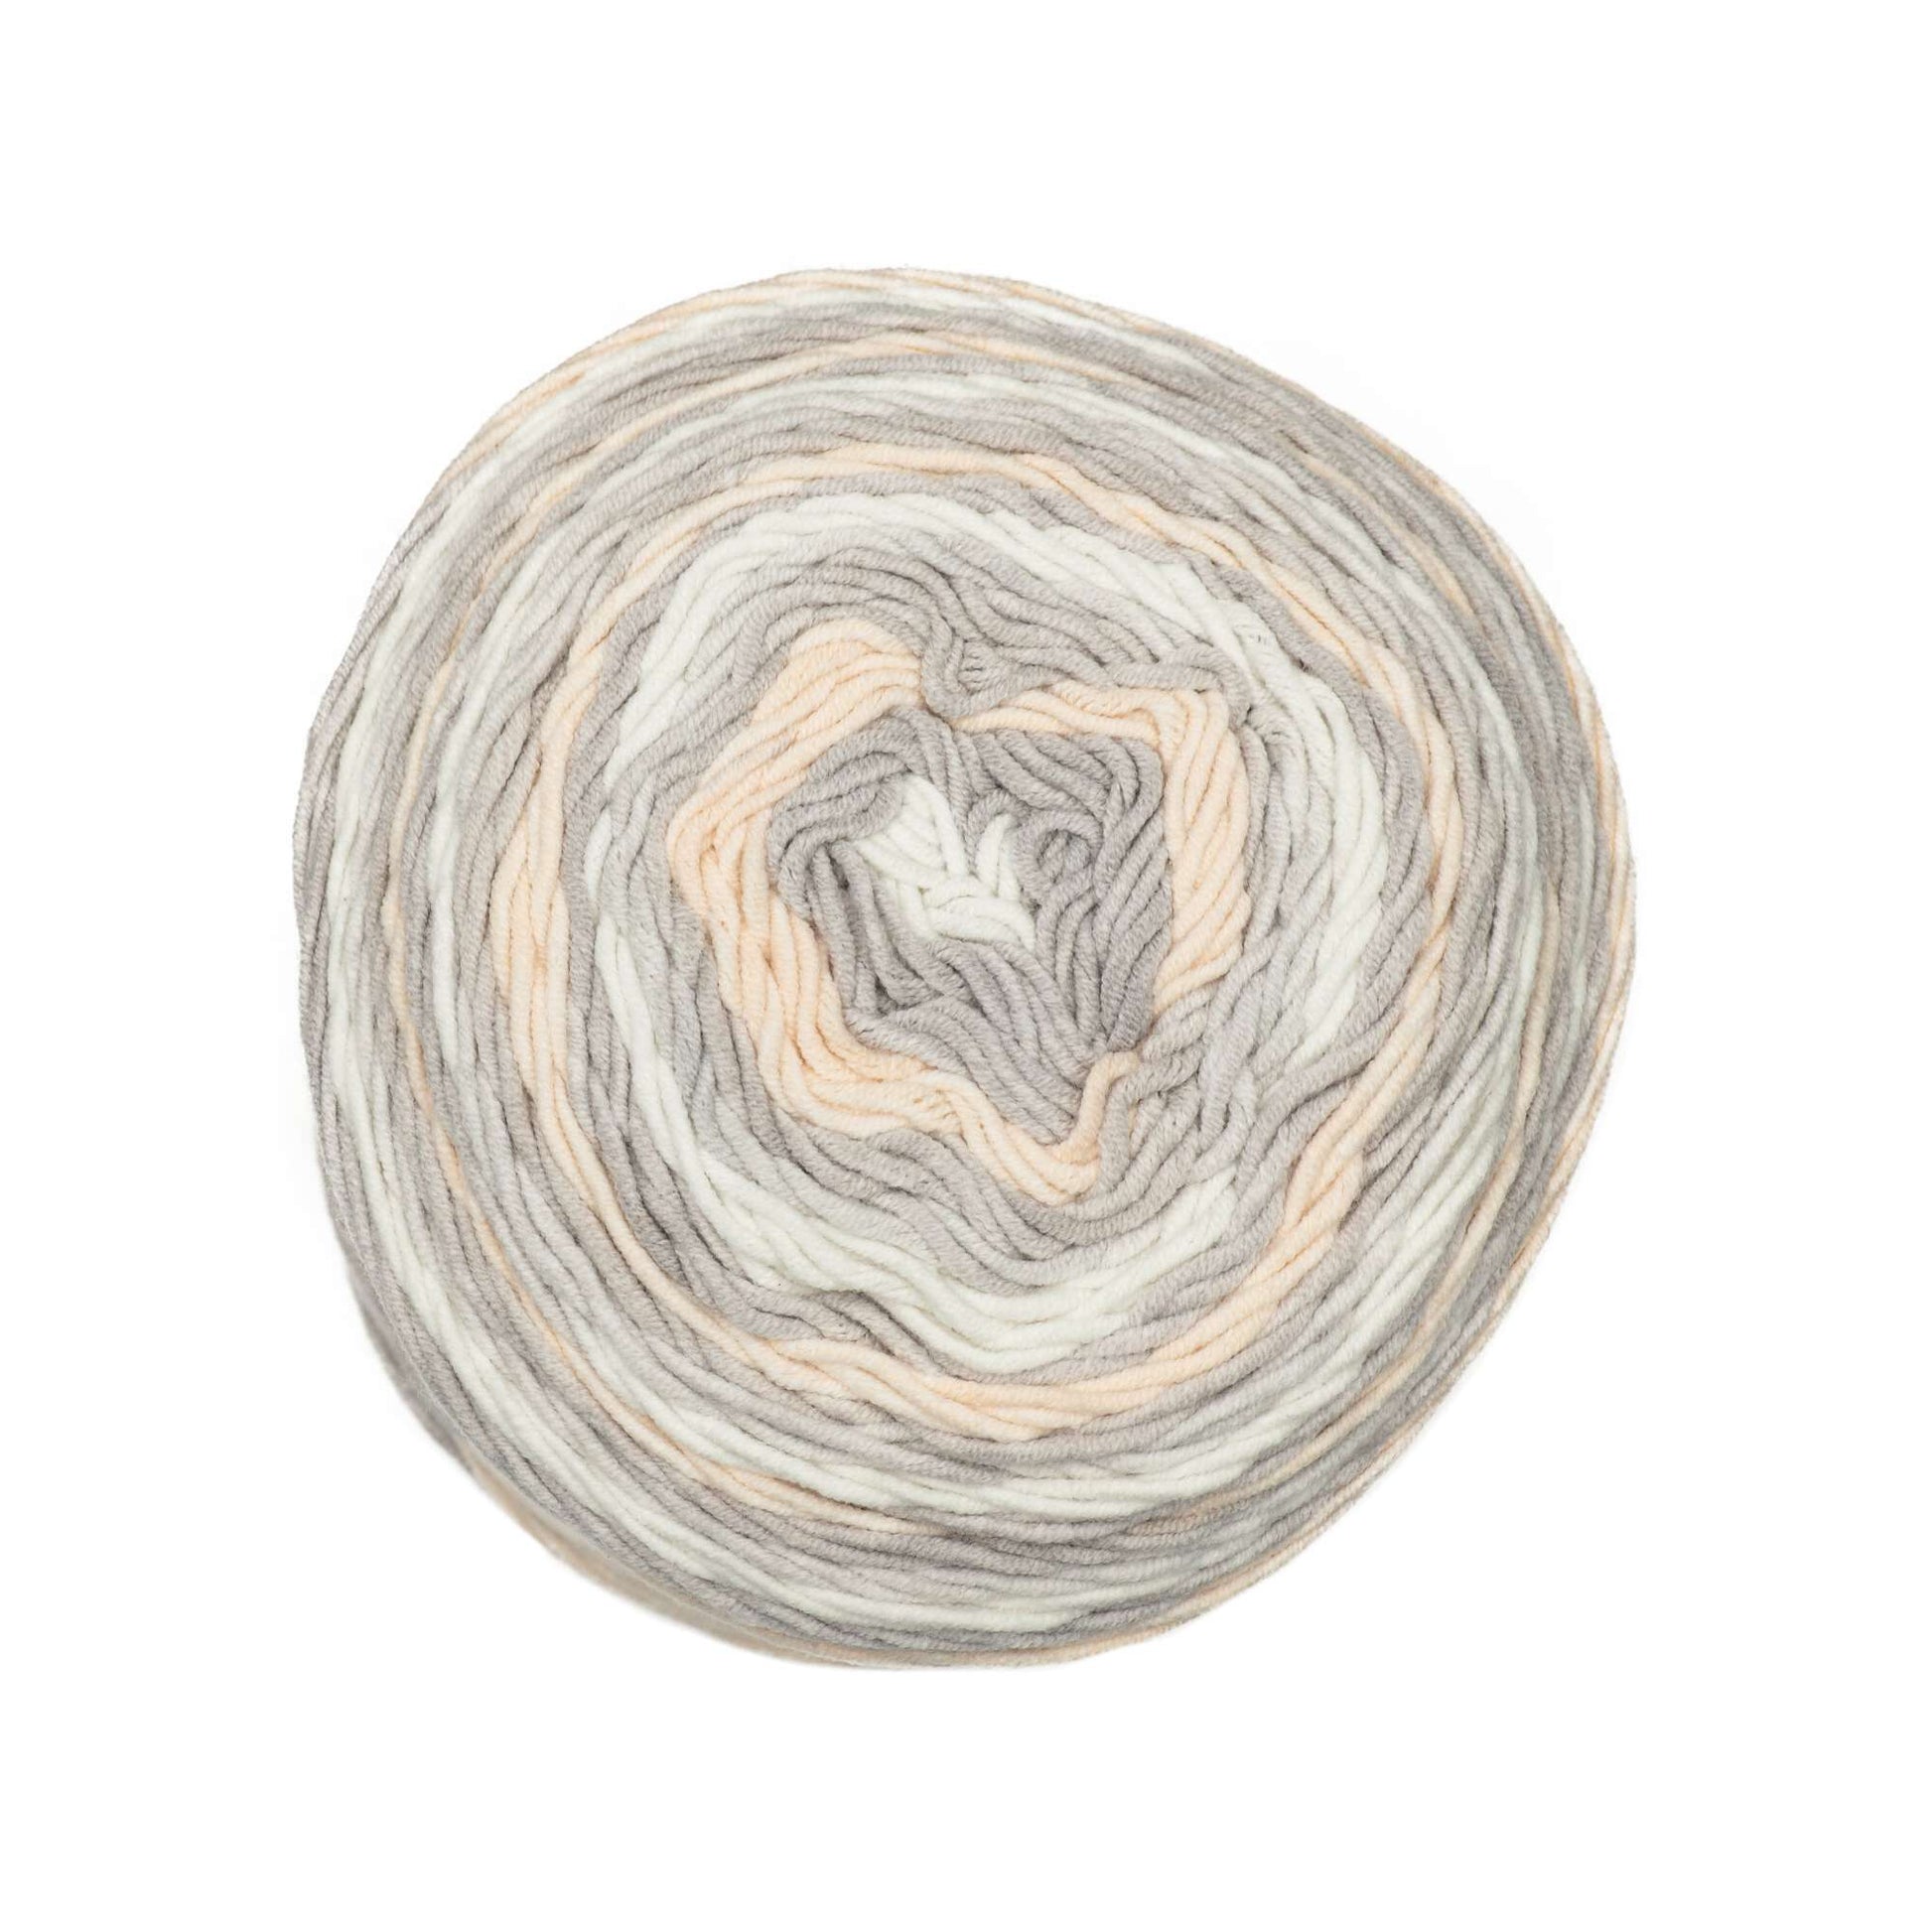 Caron Cotton Lava Cakes Yarn - Clearance Shades*